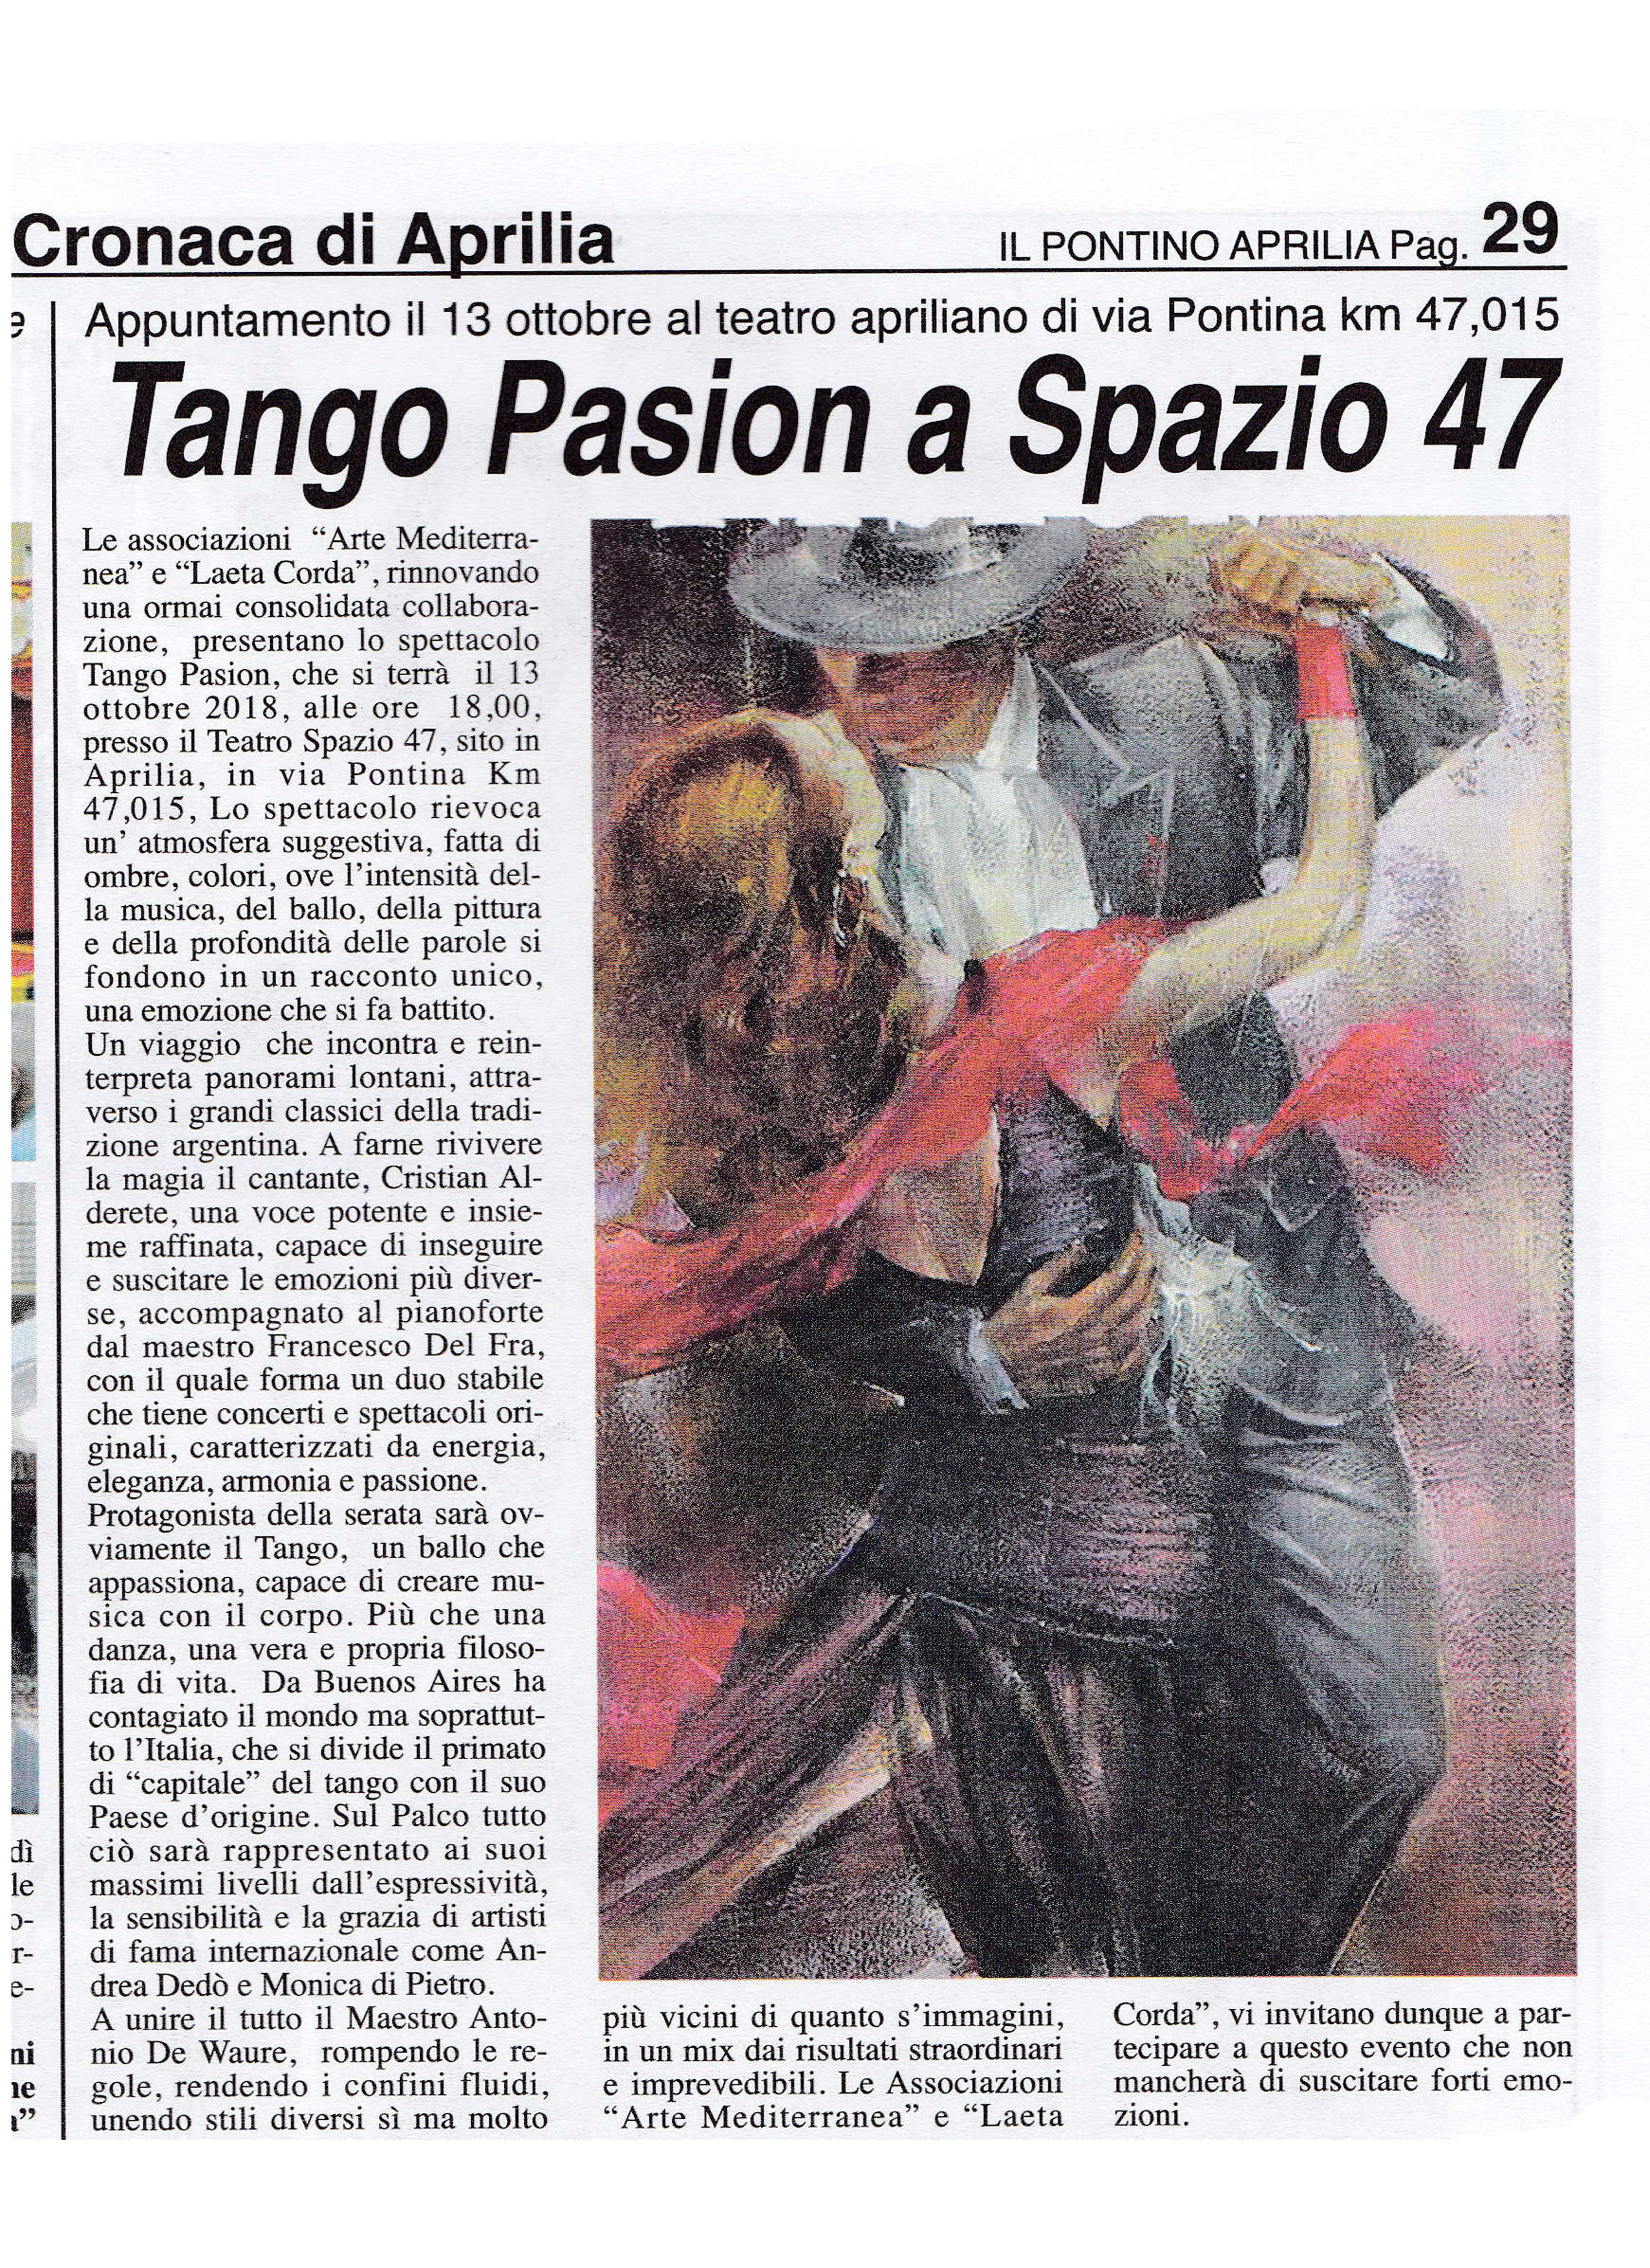 Tango passion